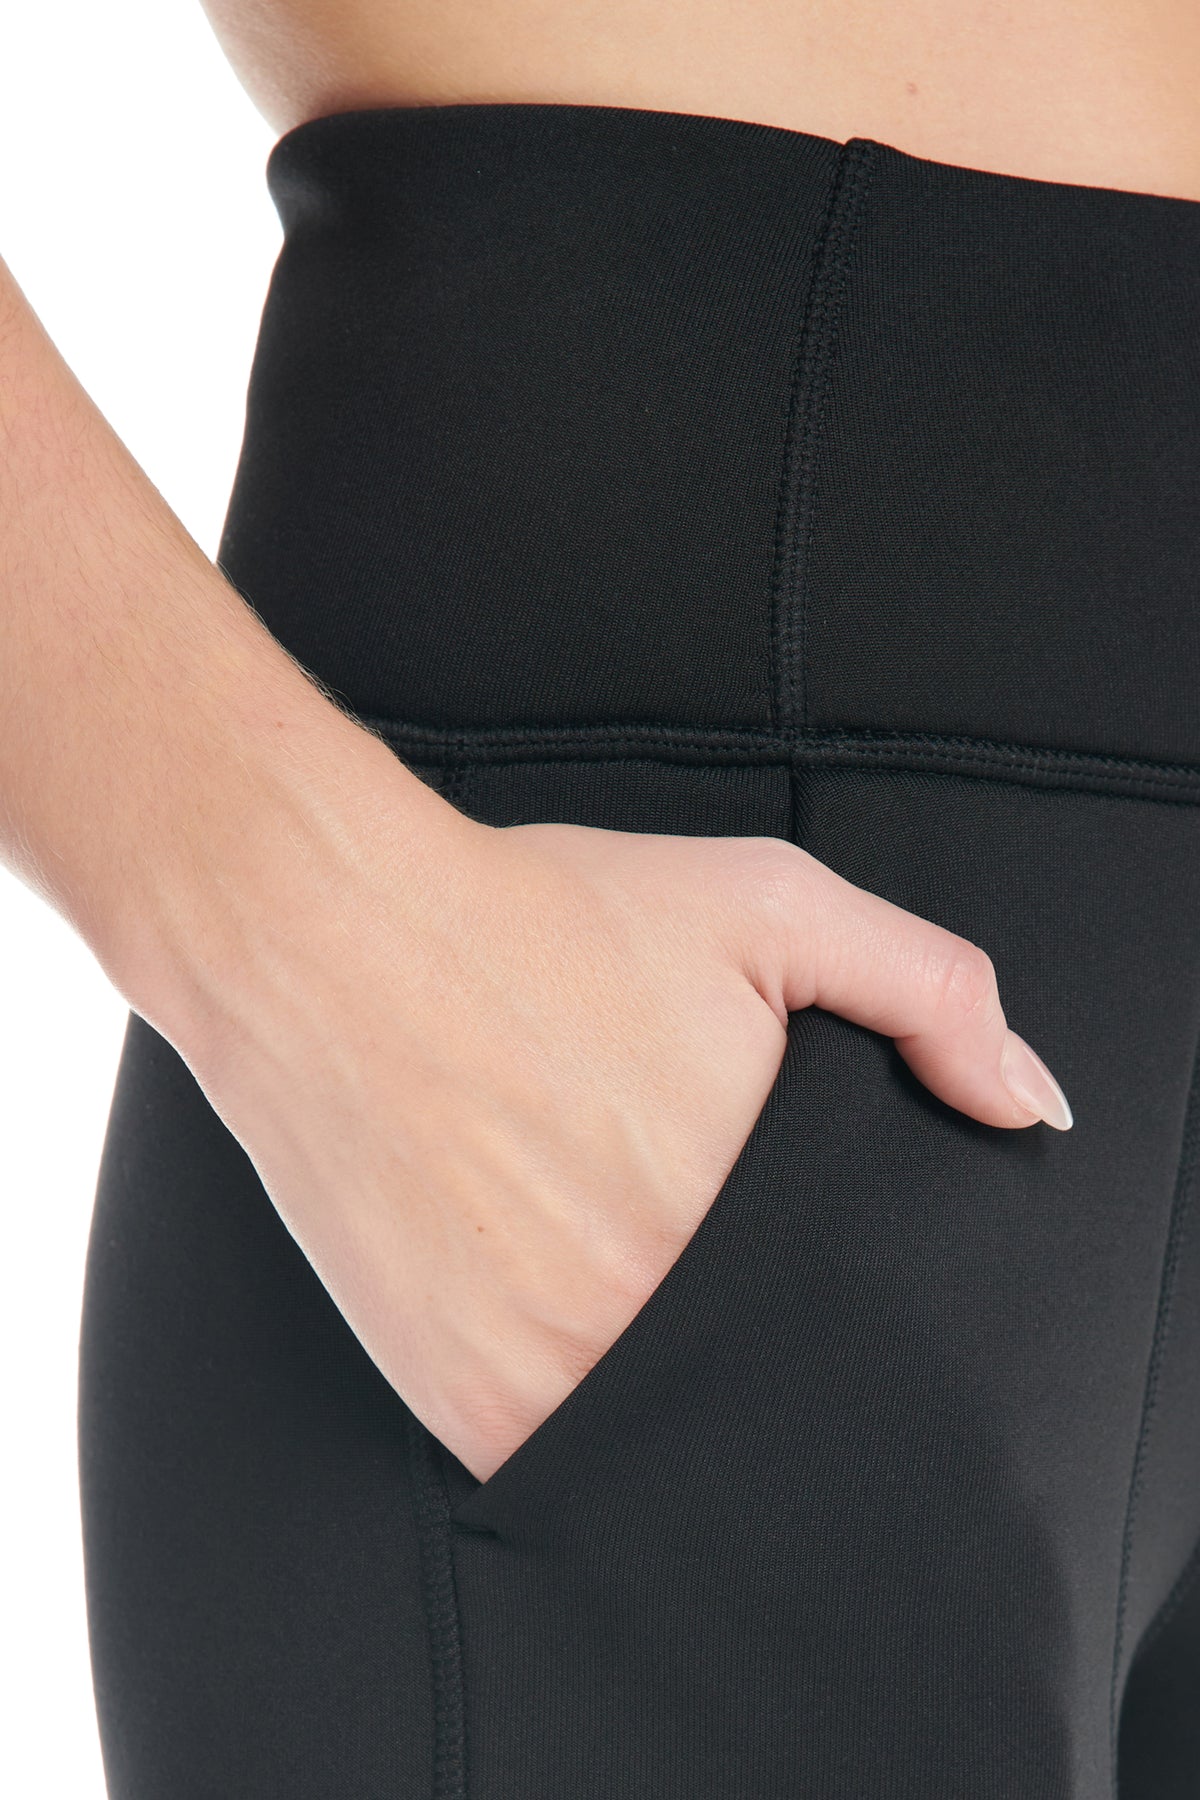 DASAYO Women Winter Outdoor Workout Warm Leggings Tummy Control